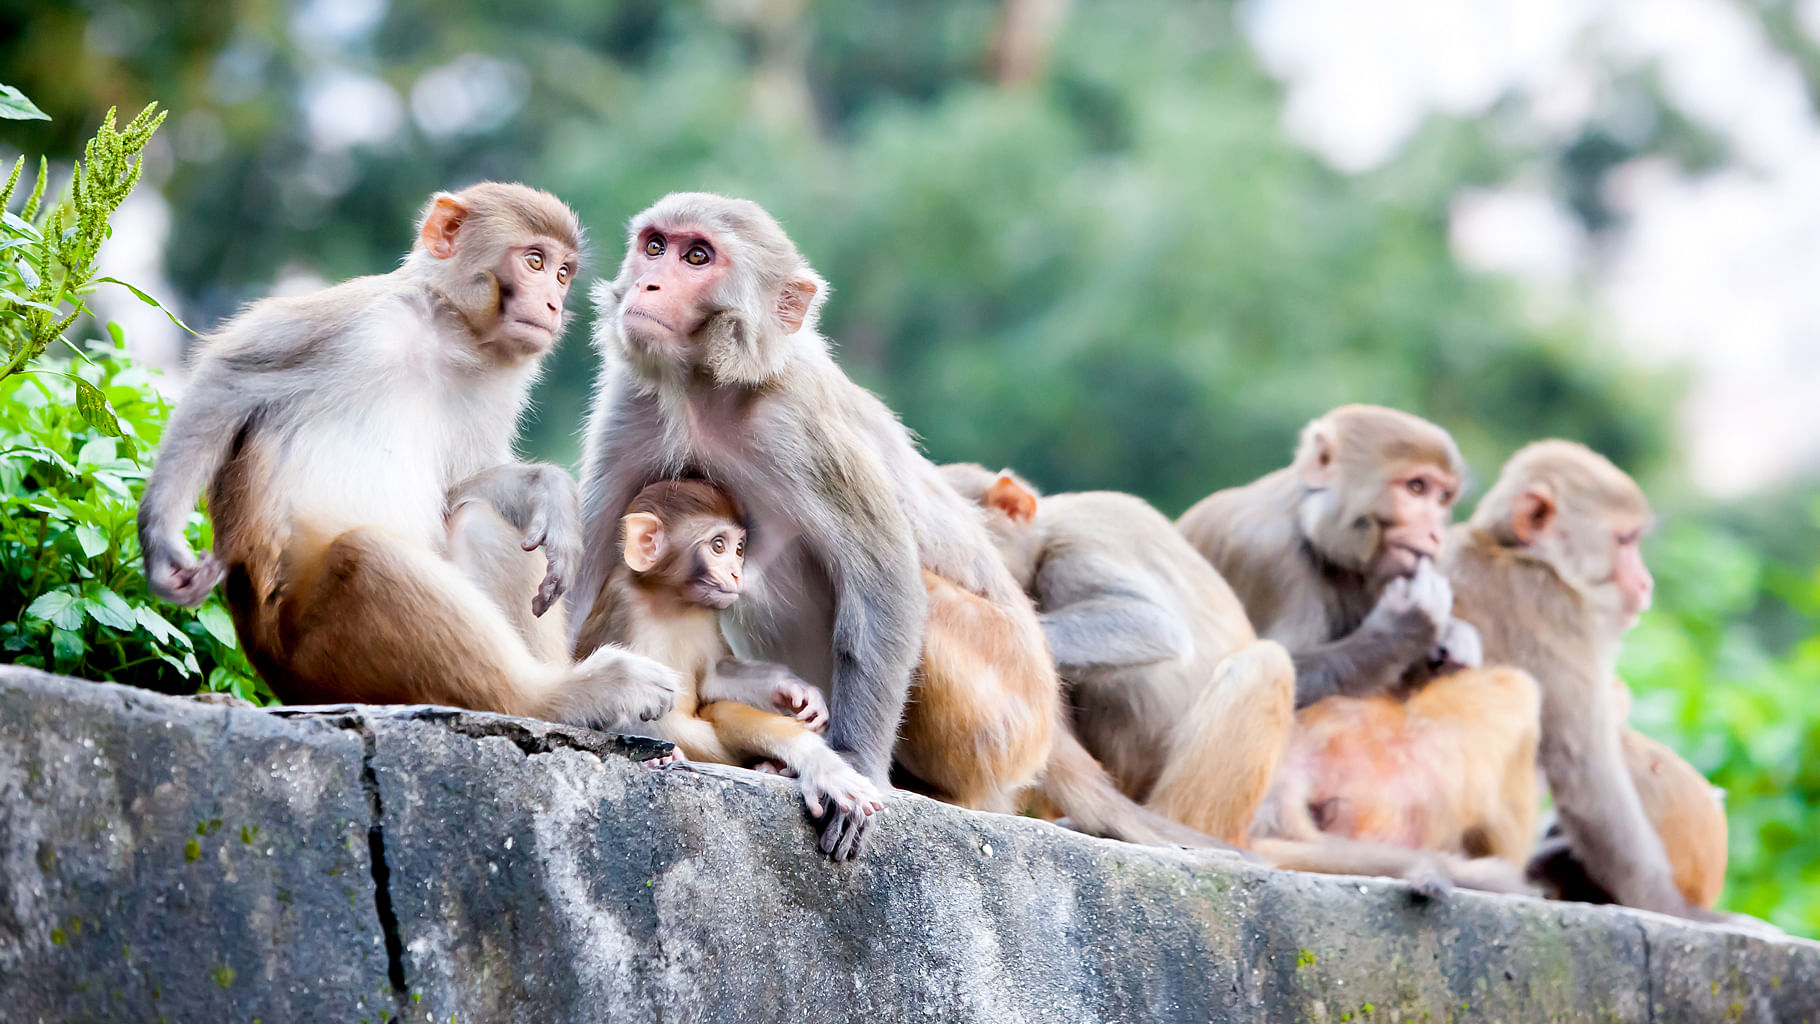 Himachal Pradesh is currently home to 207,614 monkeys. (Photo: iStockphoto)